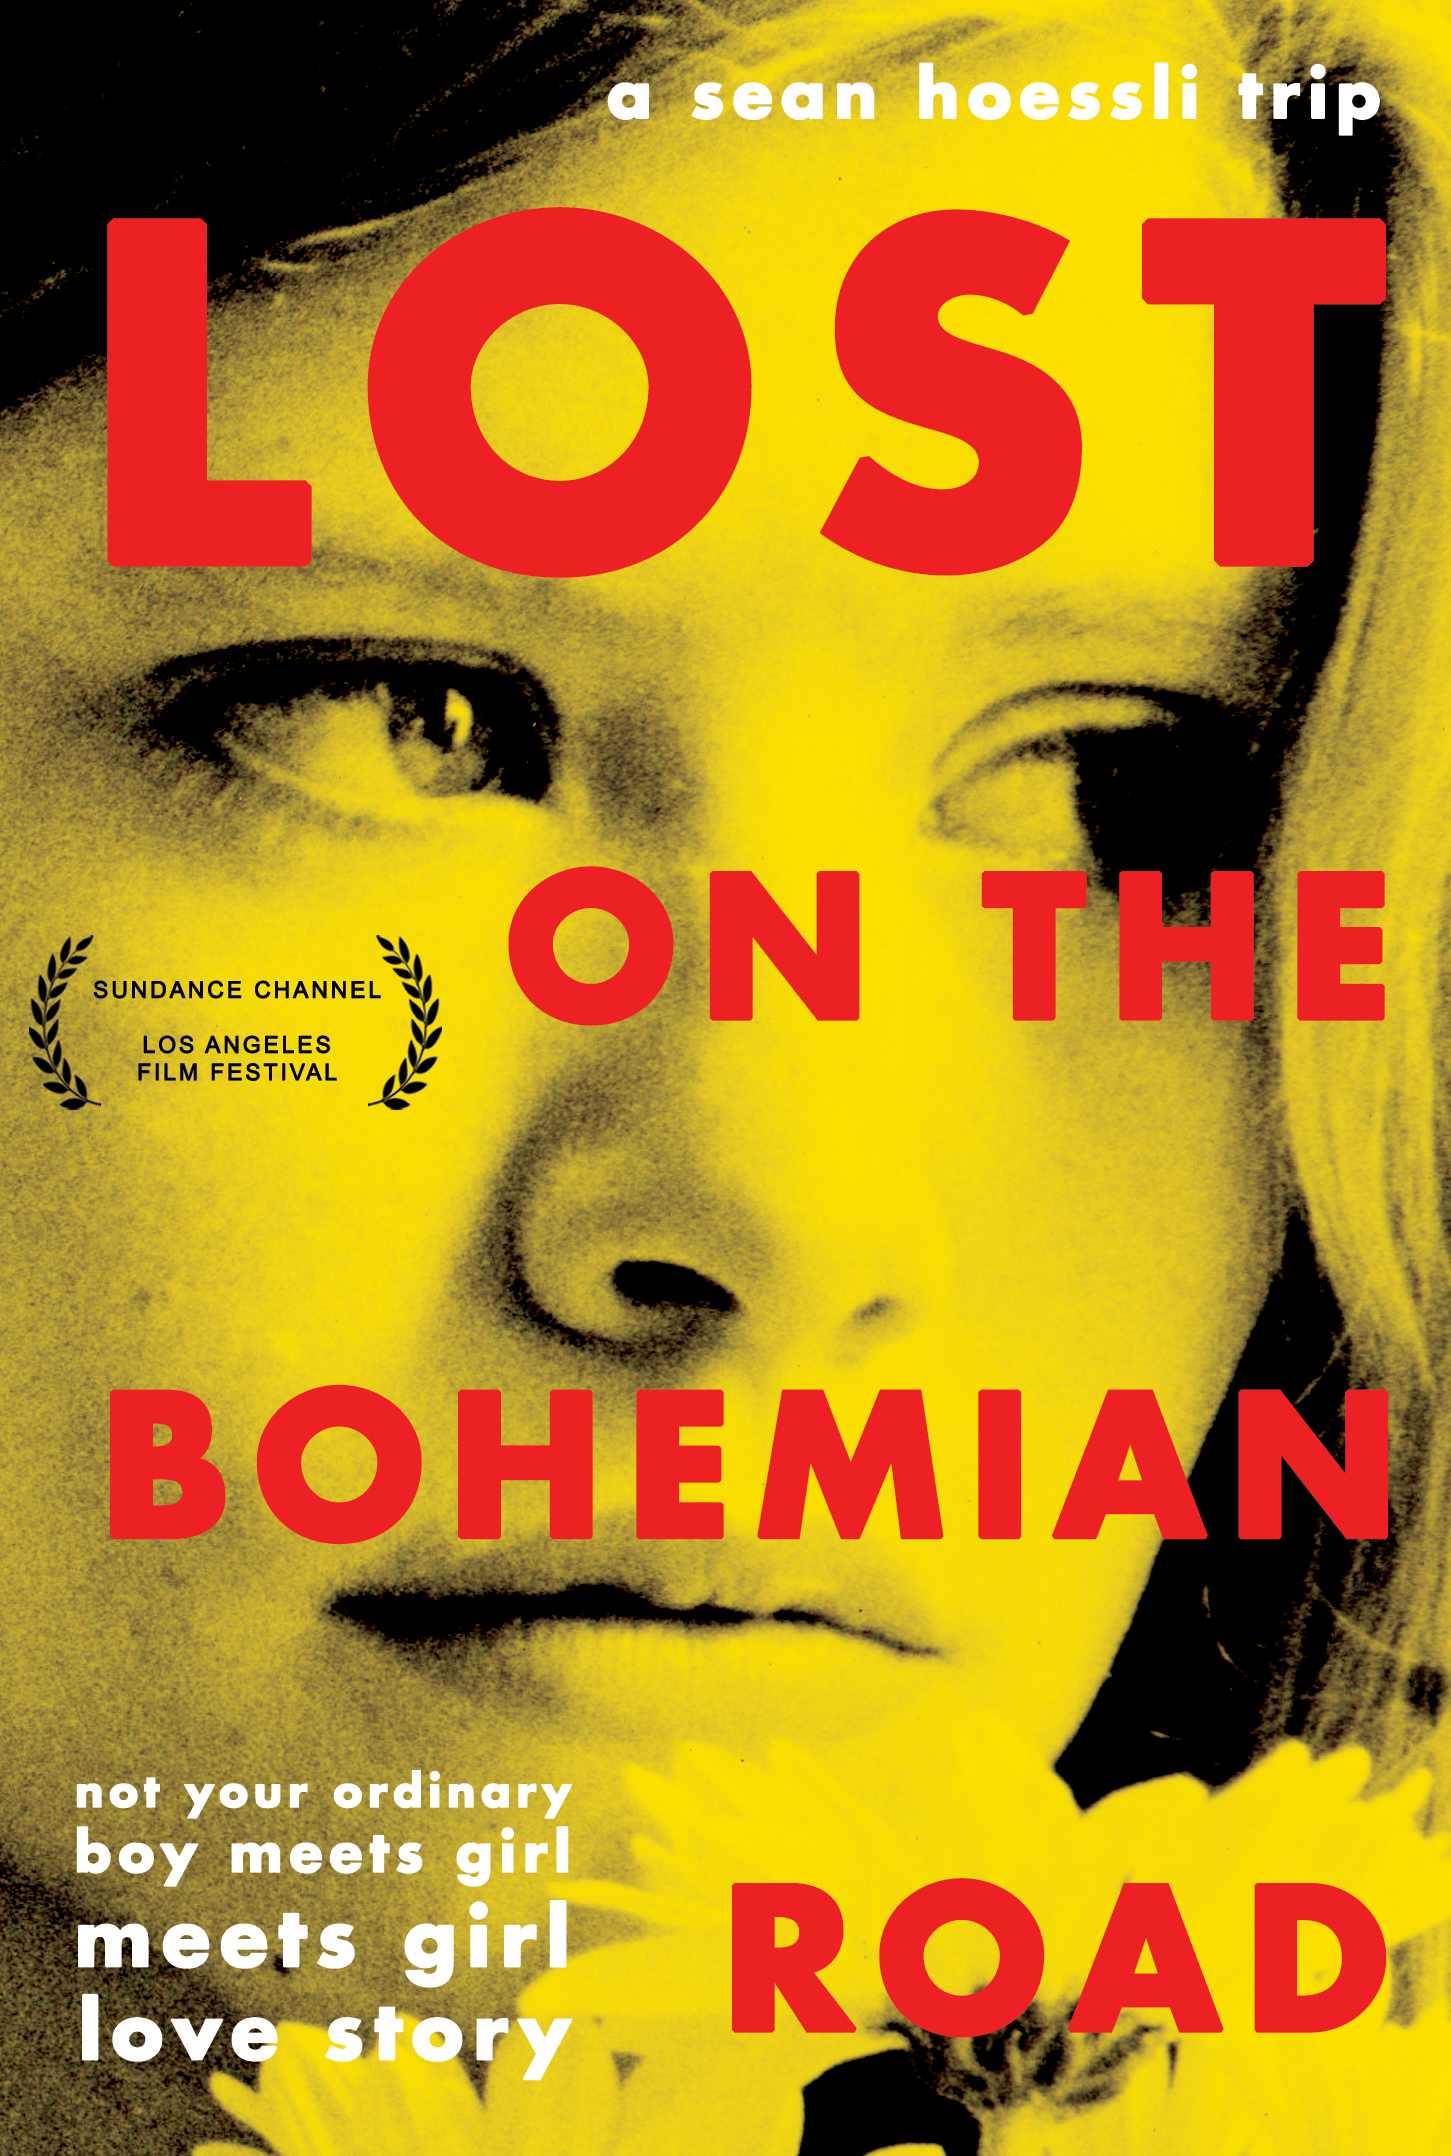 Lost on the Bohemian Road (1995) Screenshot 5 